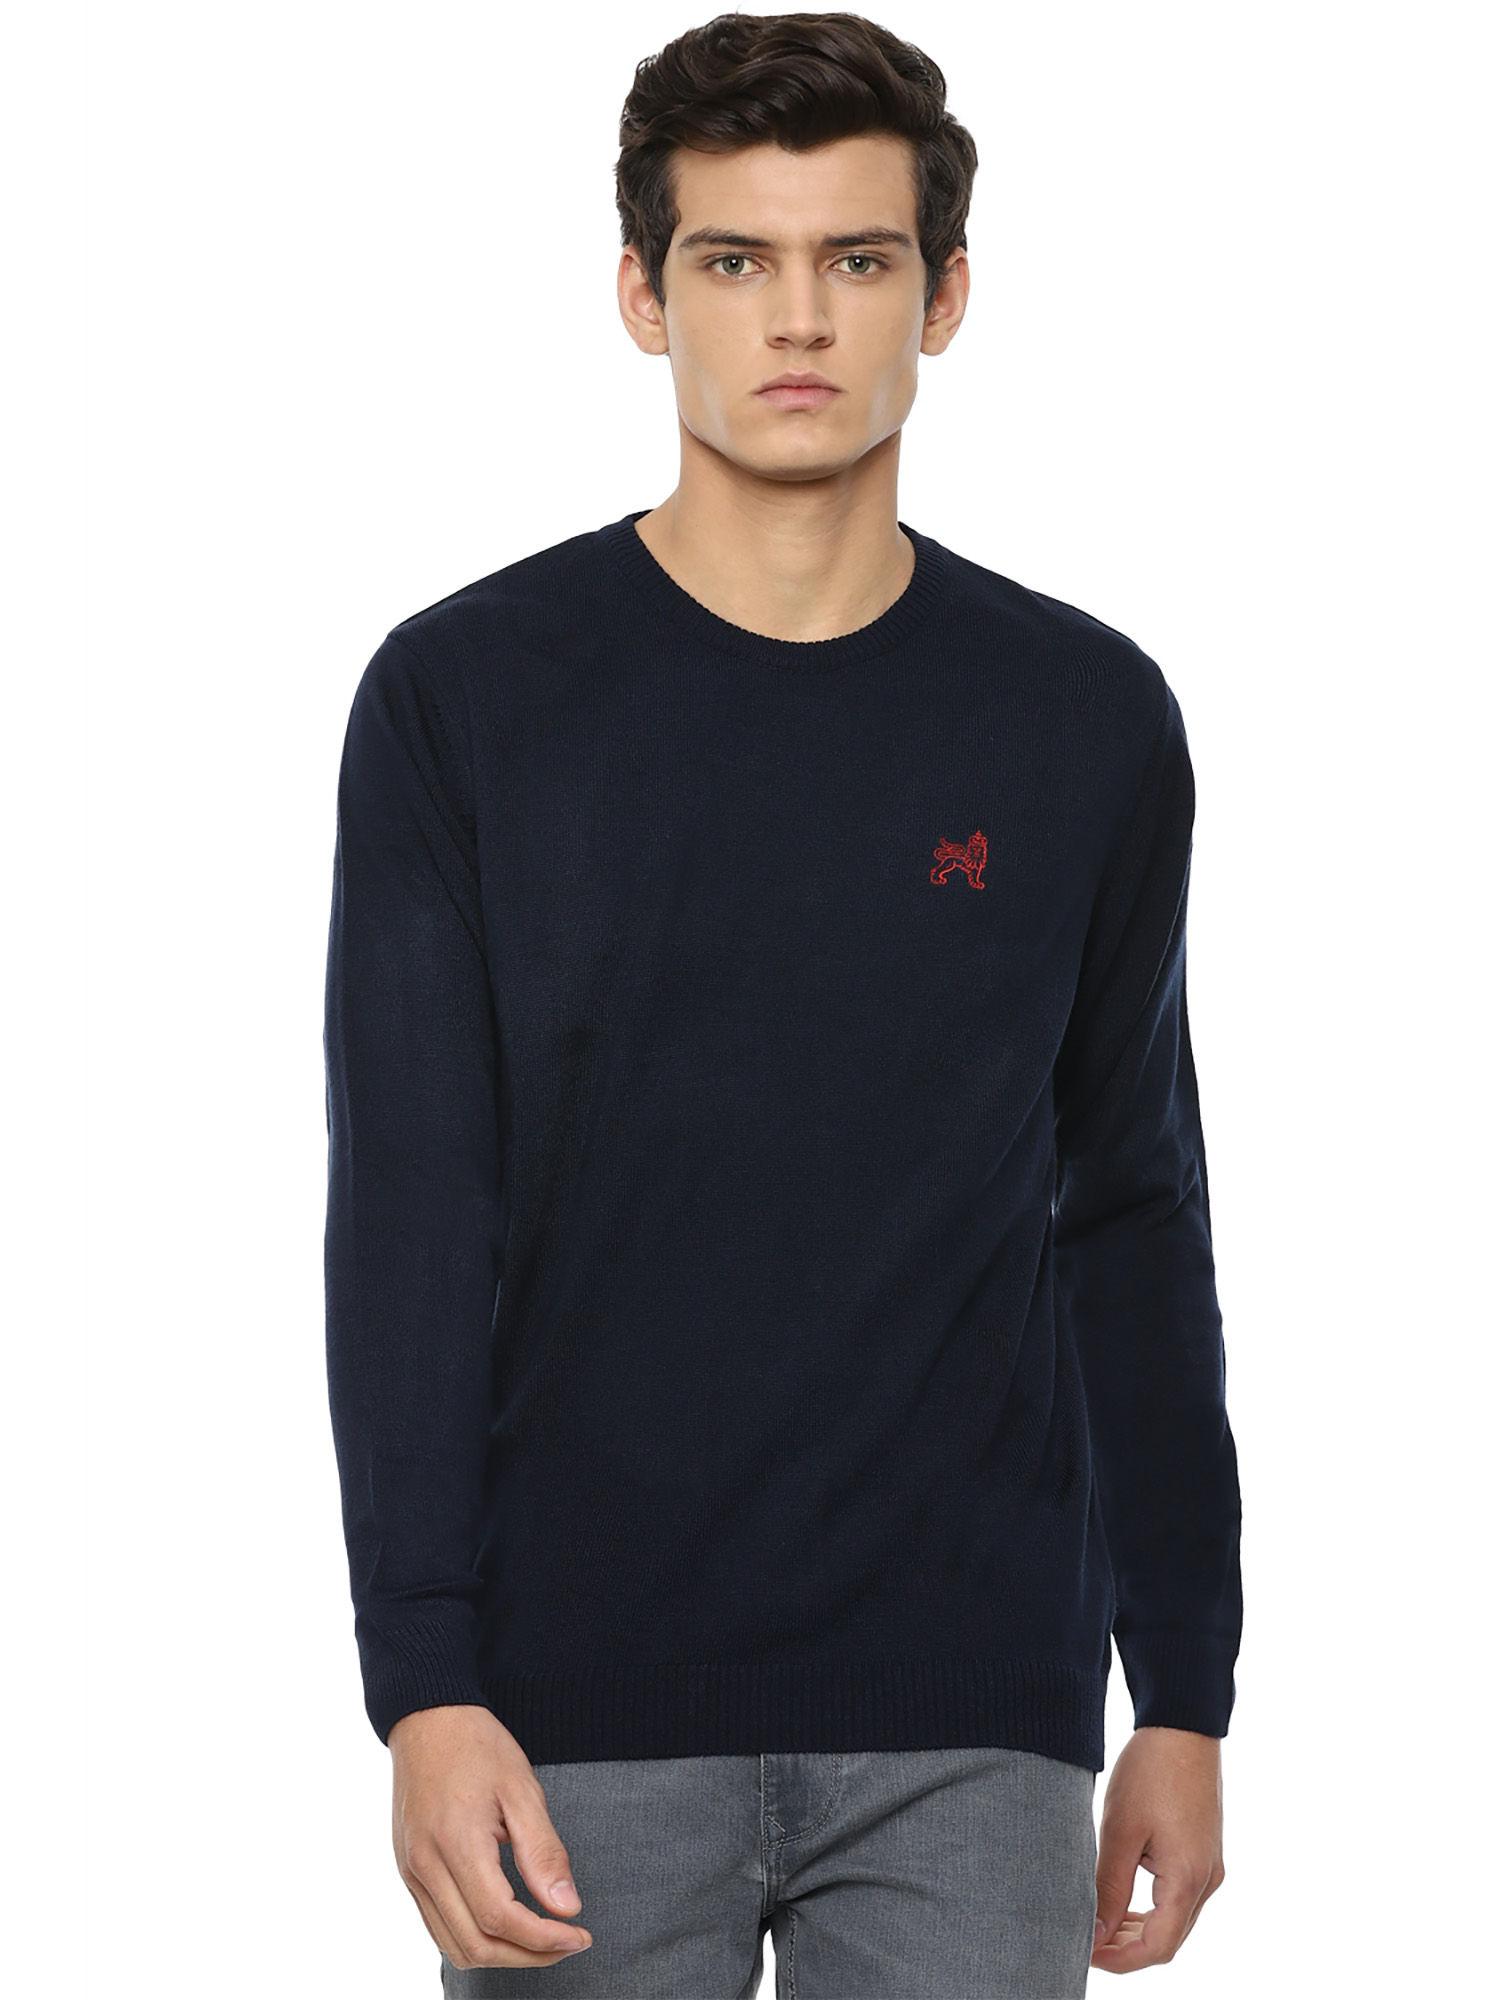 navy sweater